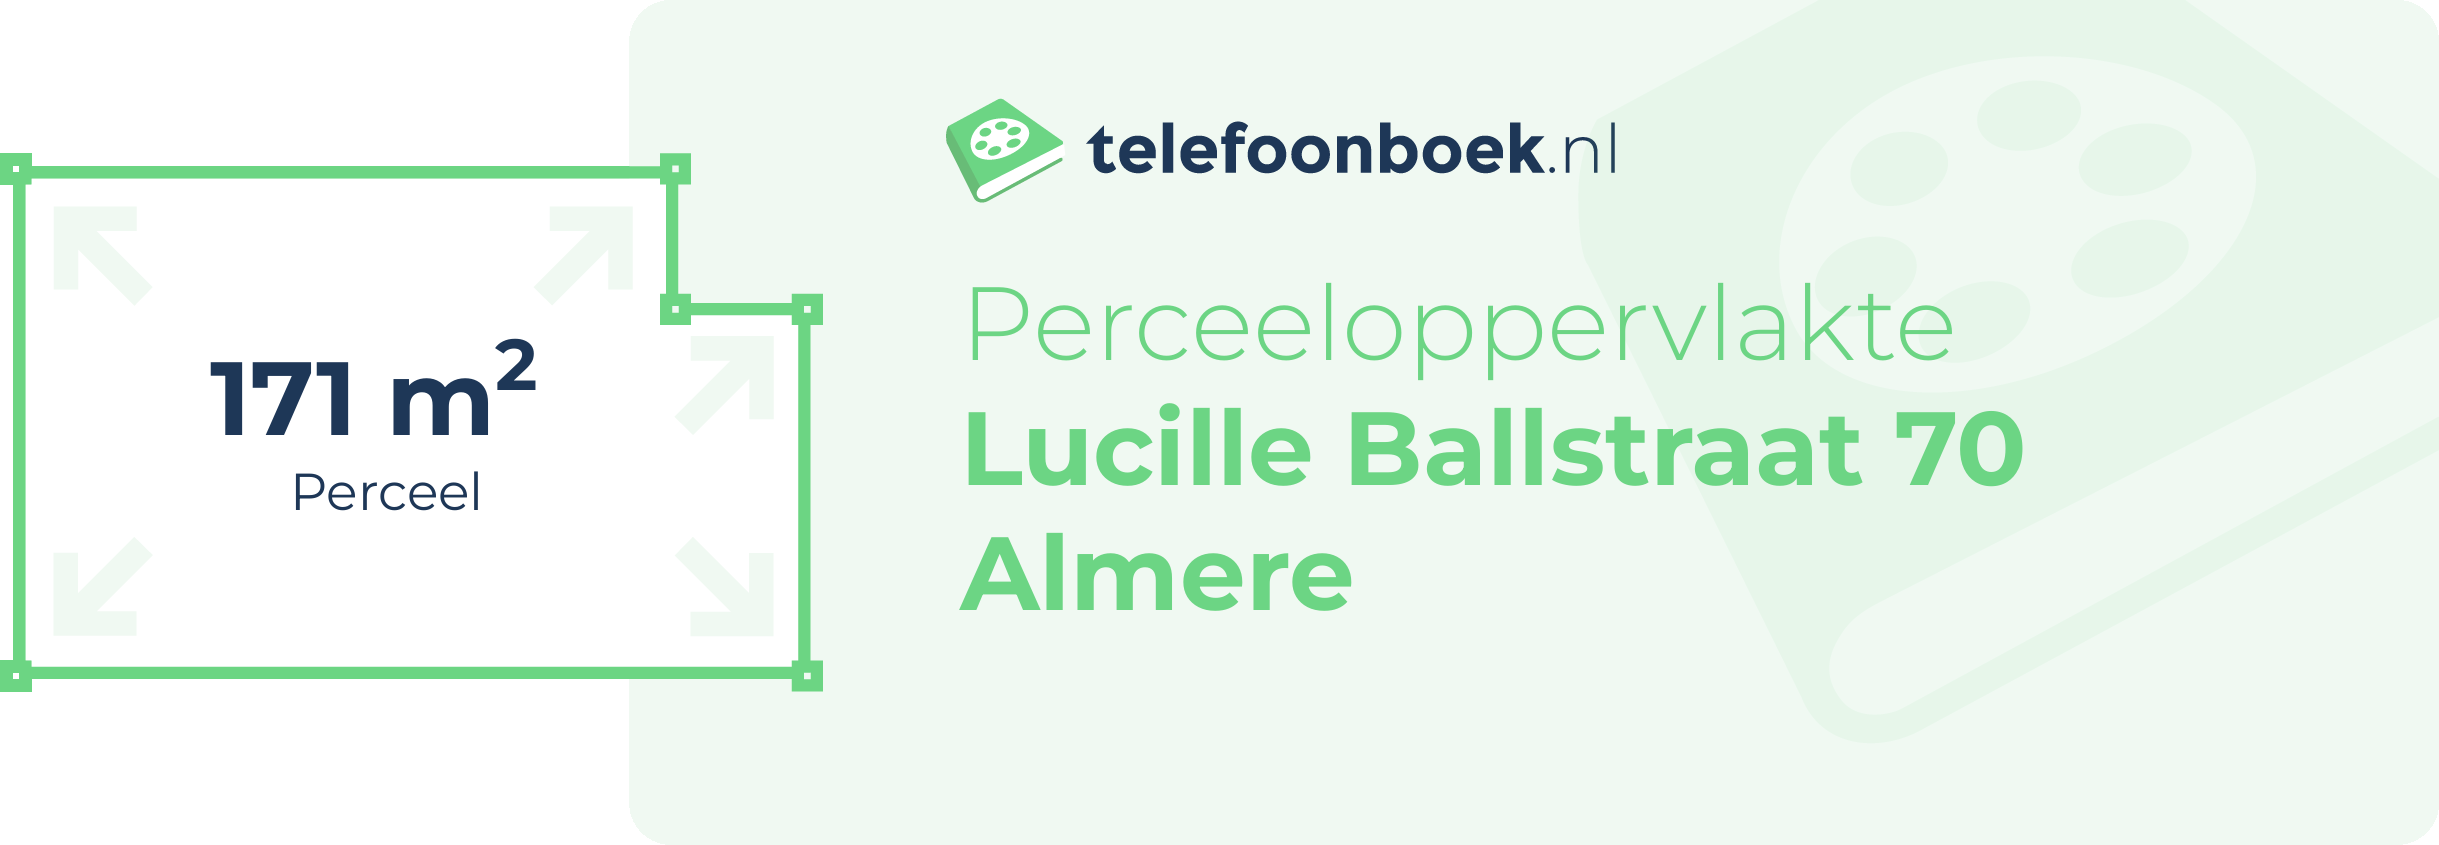 Perceeloppervlakte Lucille Ballstraat 70 Almere